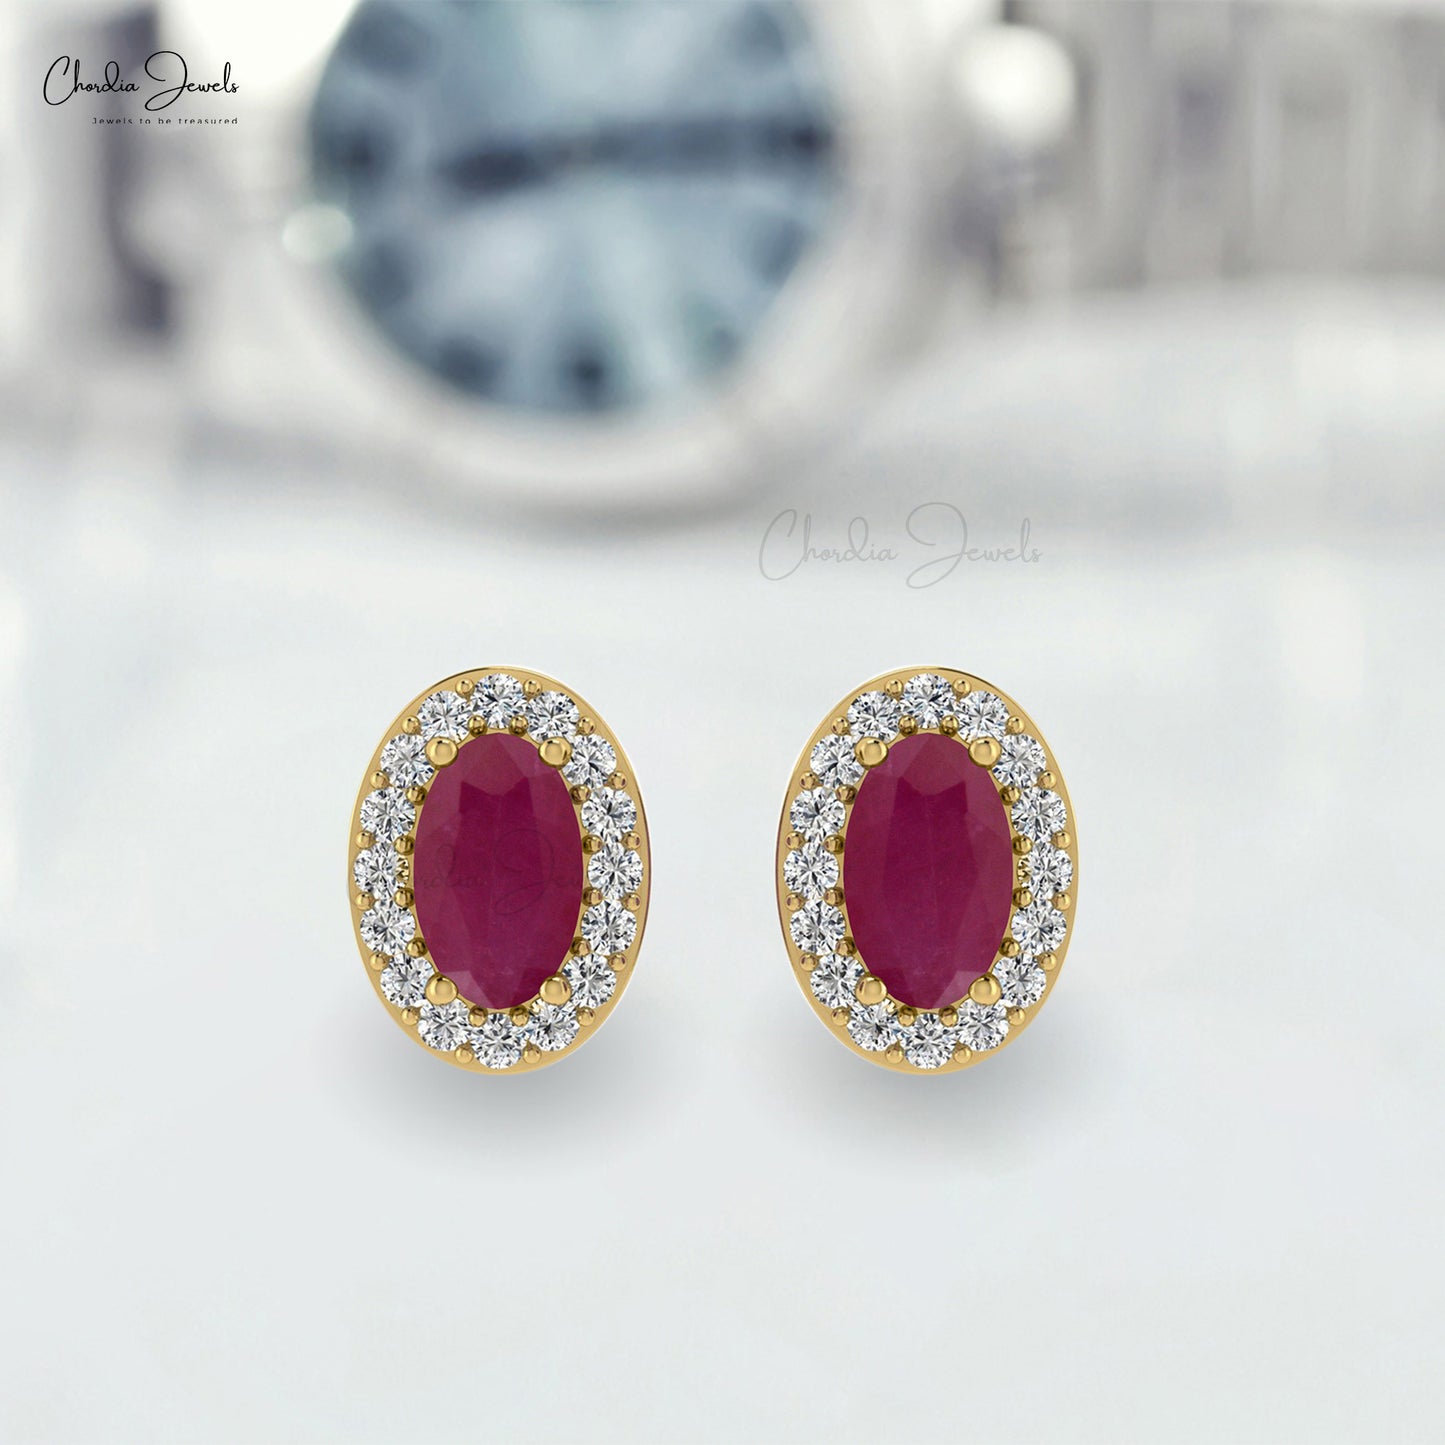 High Class 14K Gold Oval Ruby Gemstone & Diamond Halo Earrings